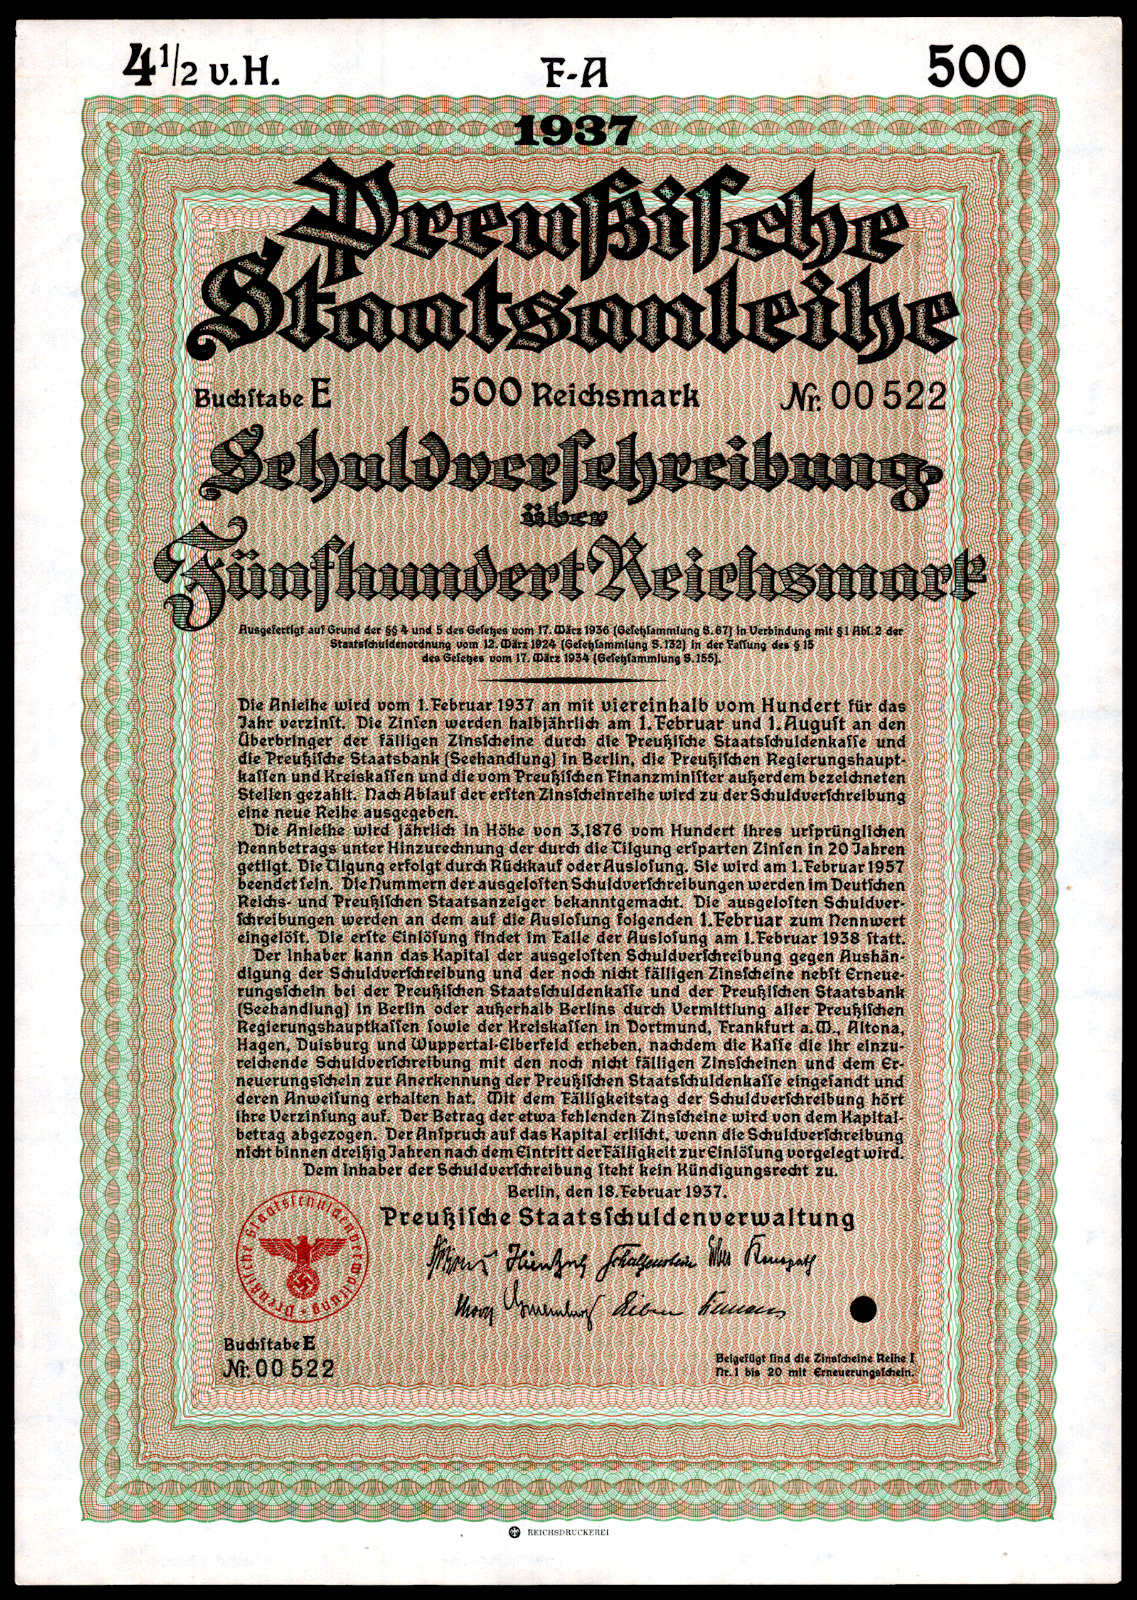 1937 Germany RM 500 Prussia State Treasury Bond Pre-War Reichsadler Seal VF+